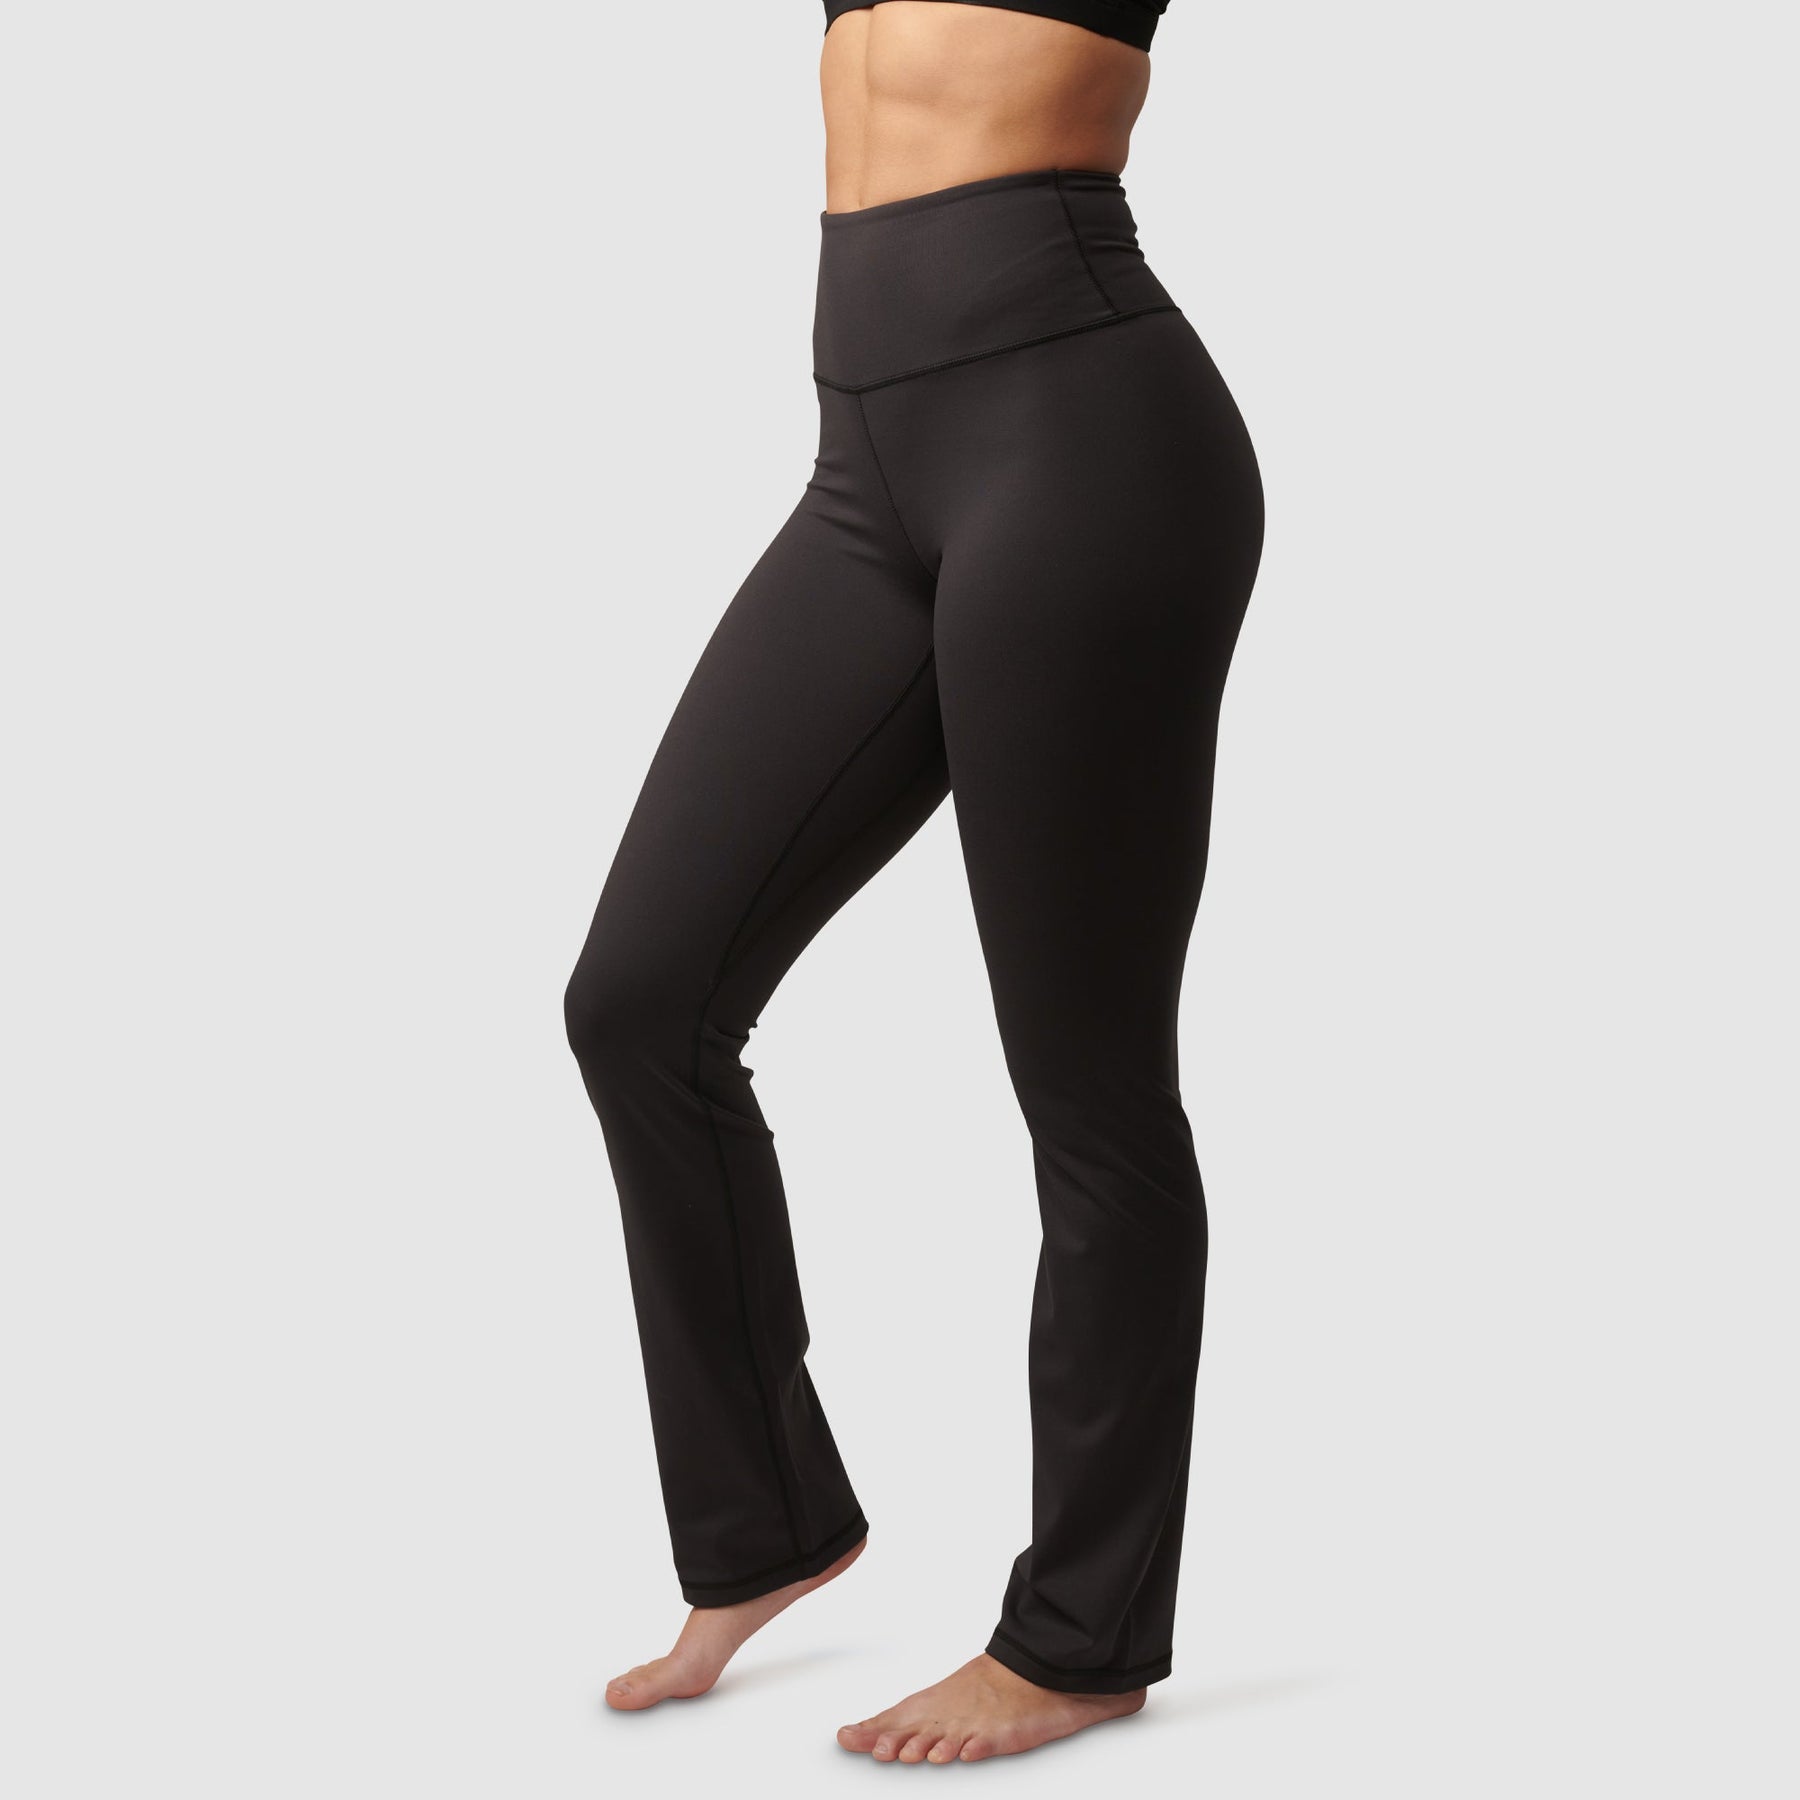 Super Soft Flare Yoga Pants - Black, Women's Pants